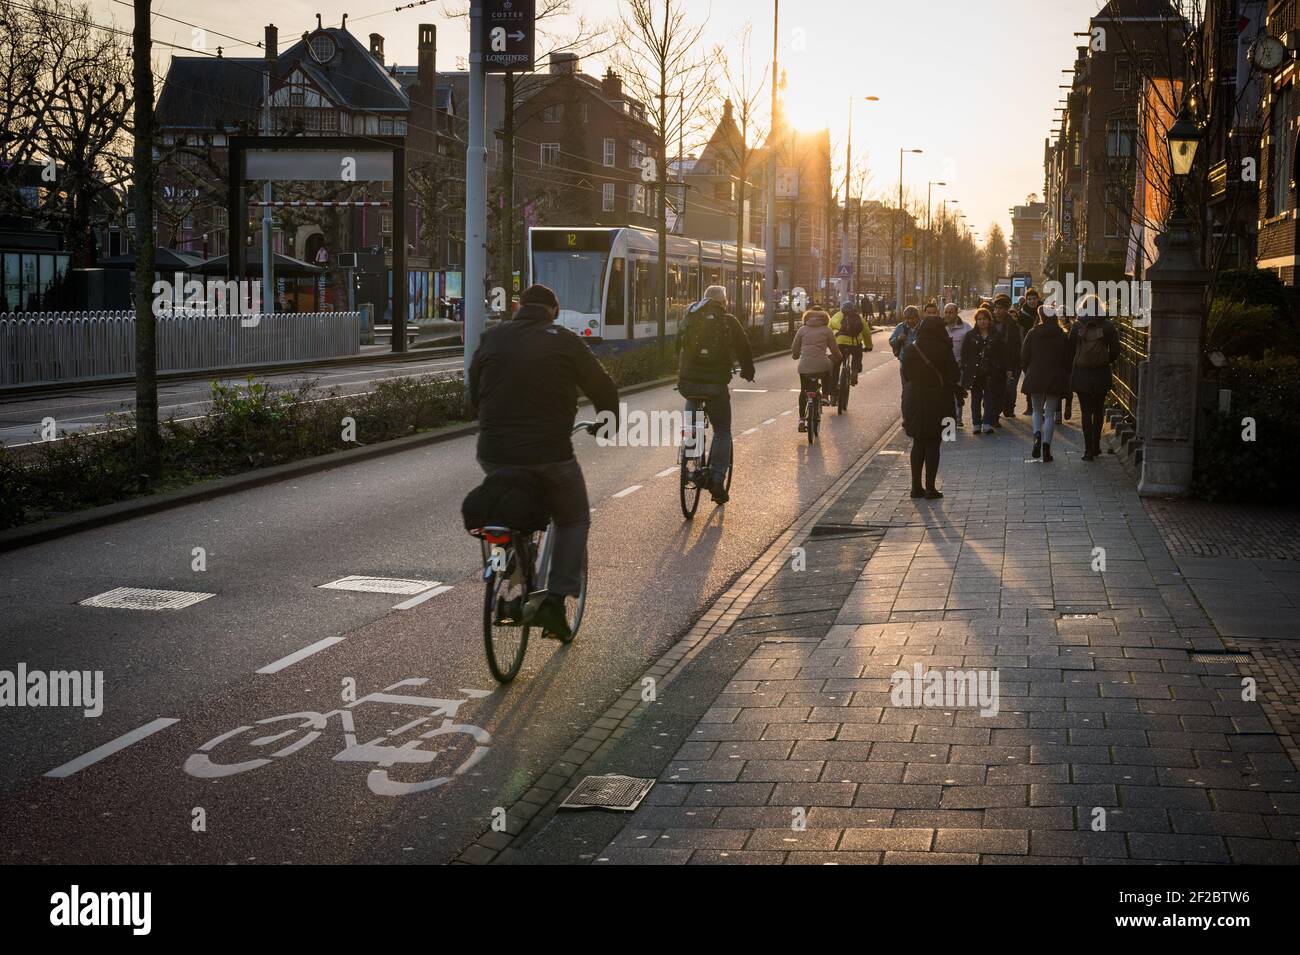 Cyclists on Jan Luijkenstraat, Amsterdam, Netherlands. Stock Photo